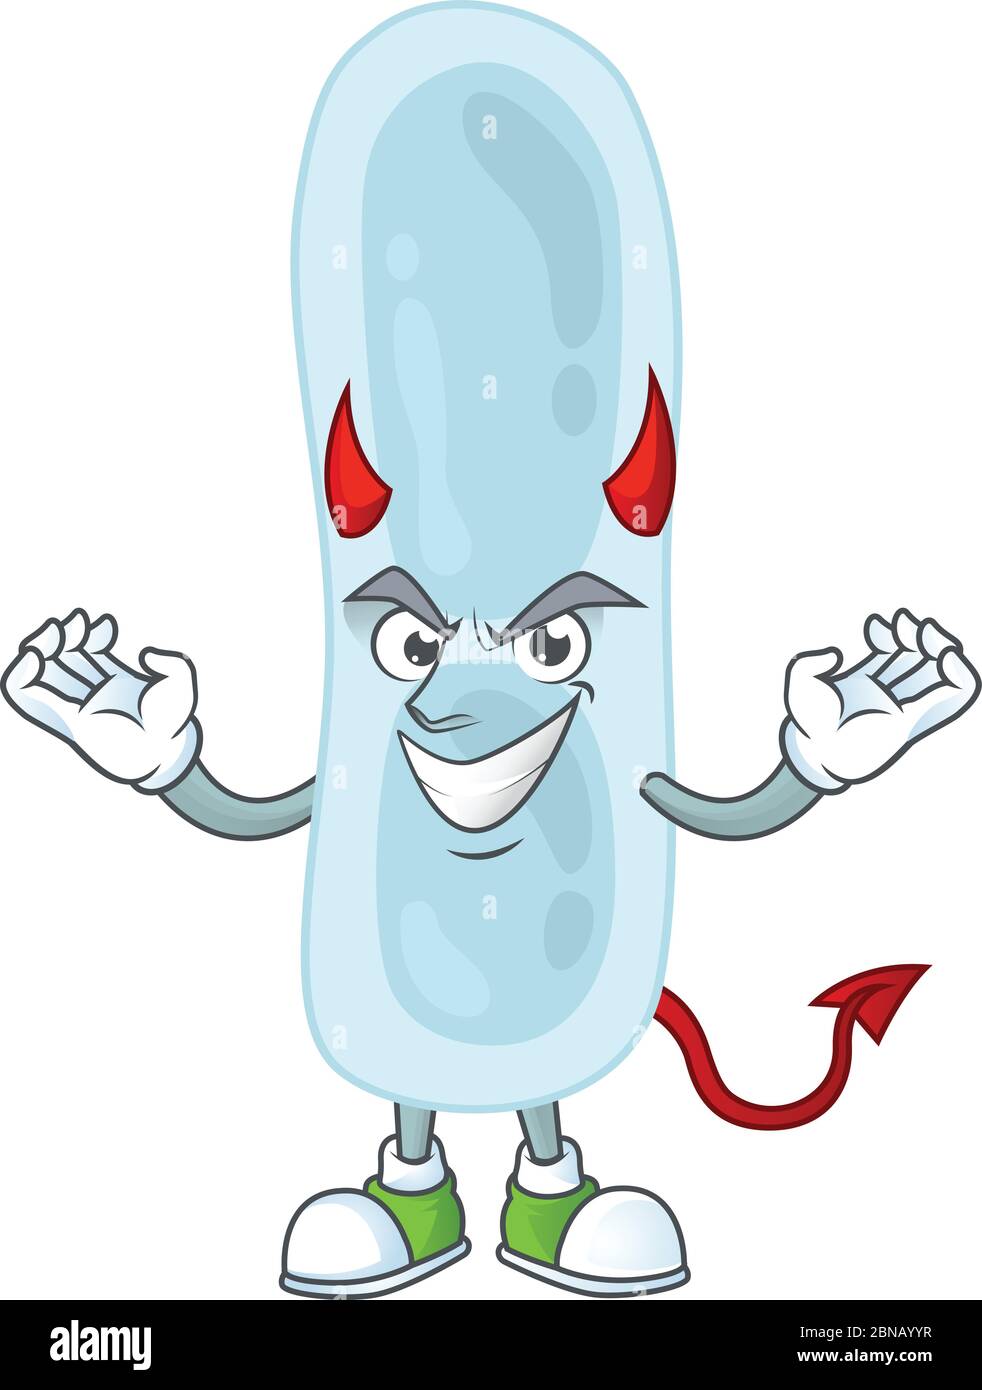 A cartoon image of klebsiella pneumoniae as a devil character Stock Vector